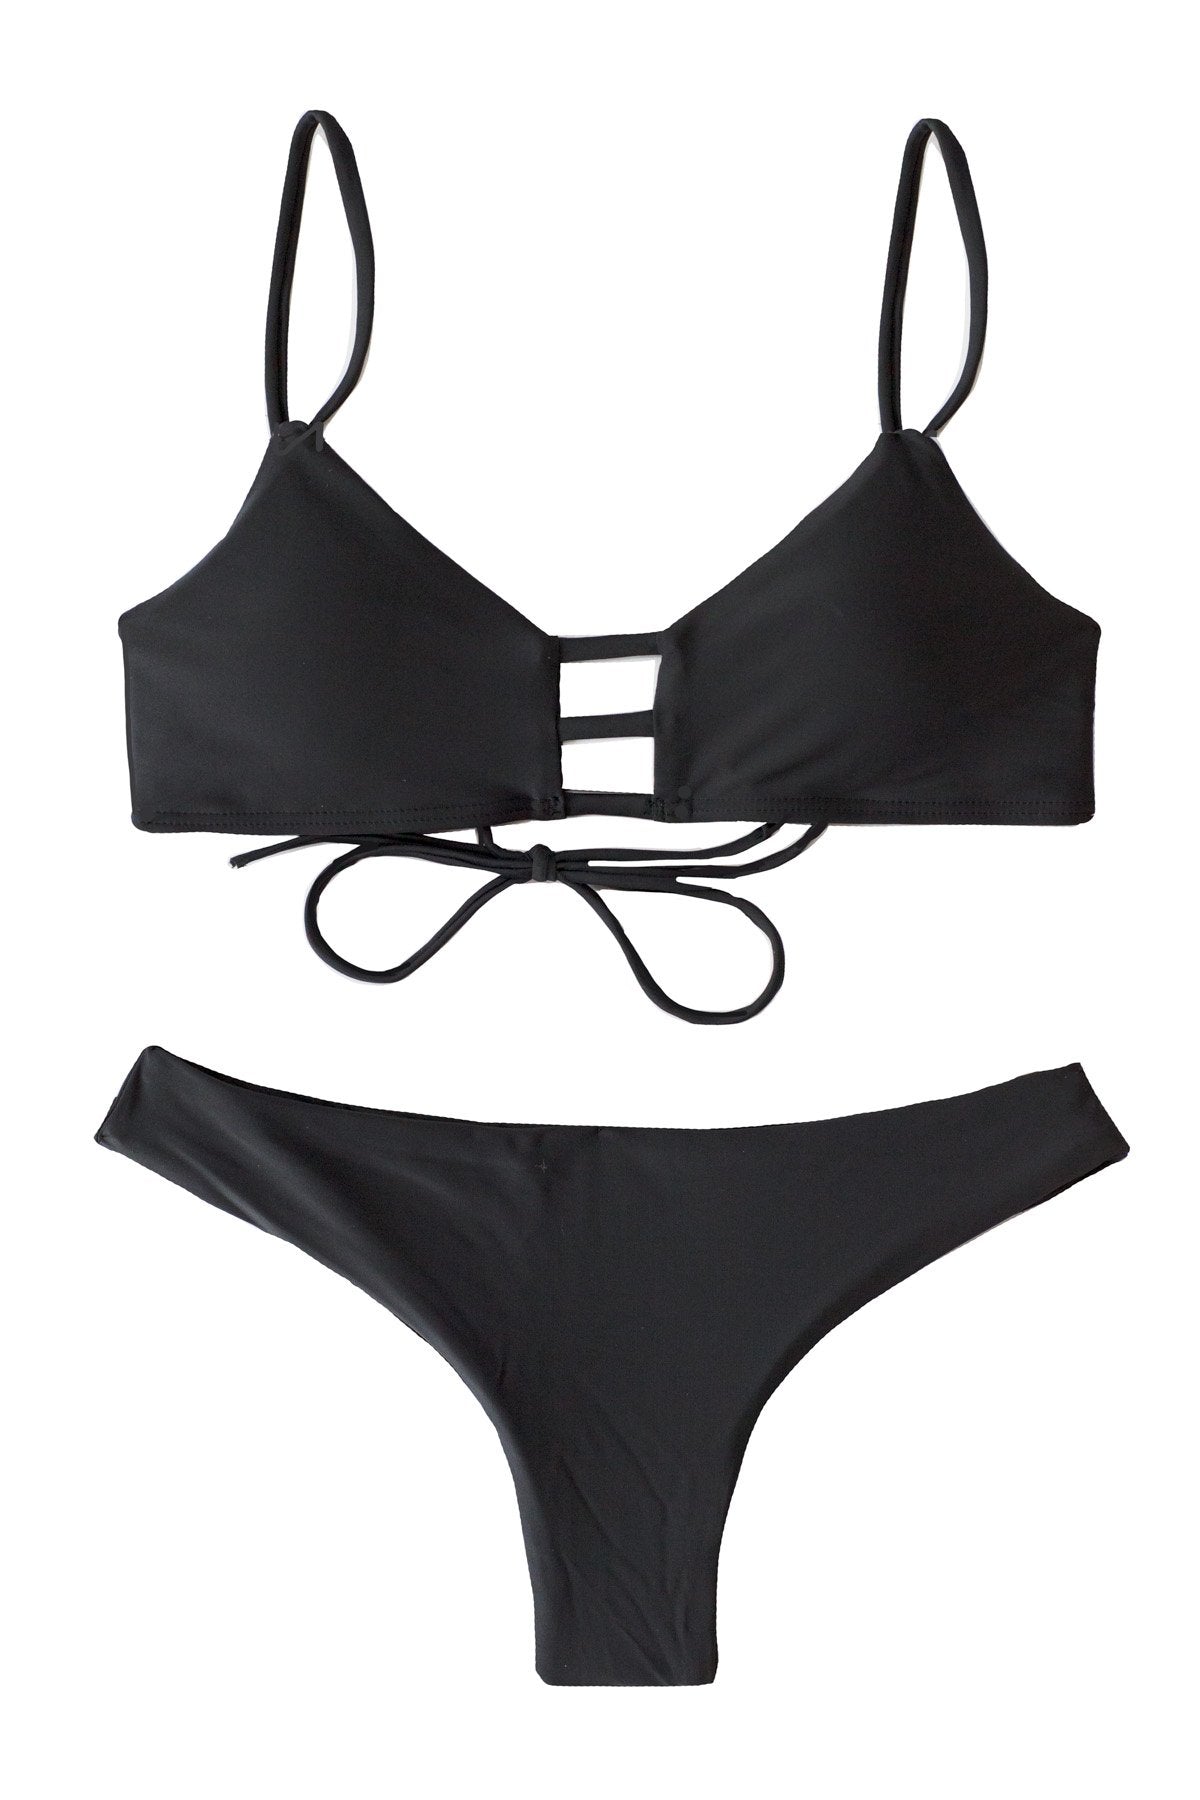 Ruched Black Cheeky Bikini Swimsuit BOTTOMS Scrunchy Detail Seamless ...